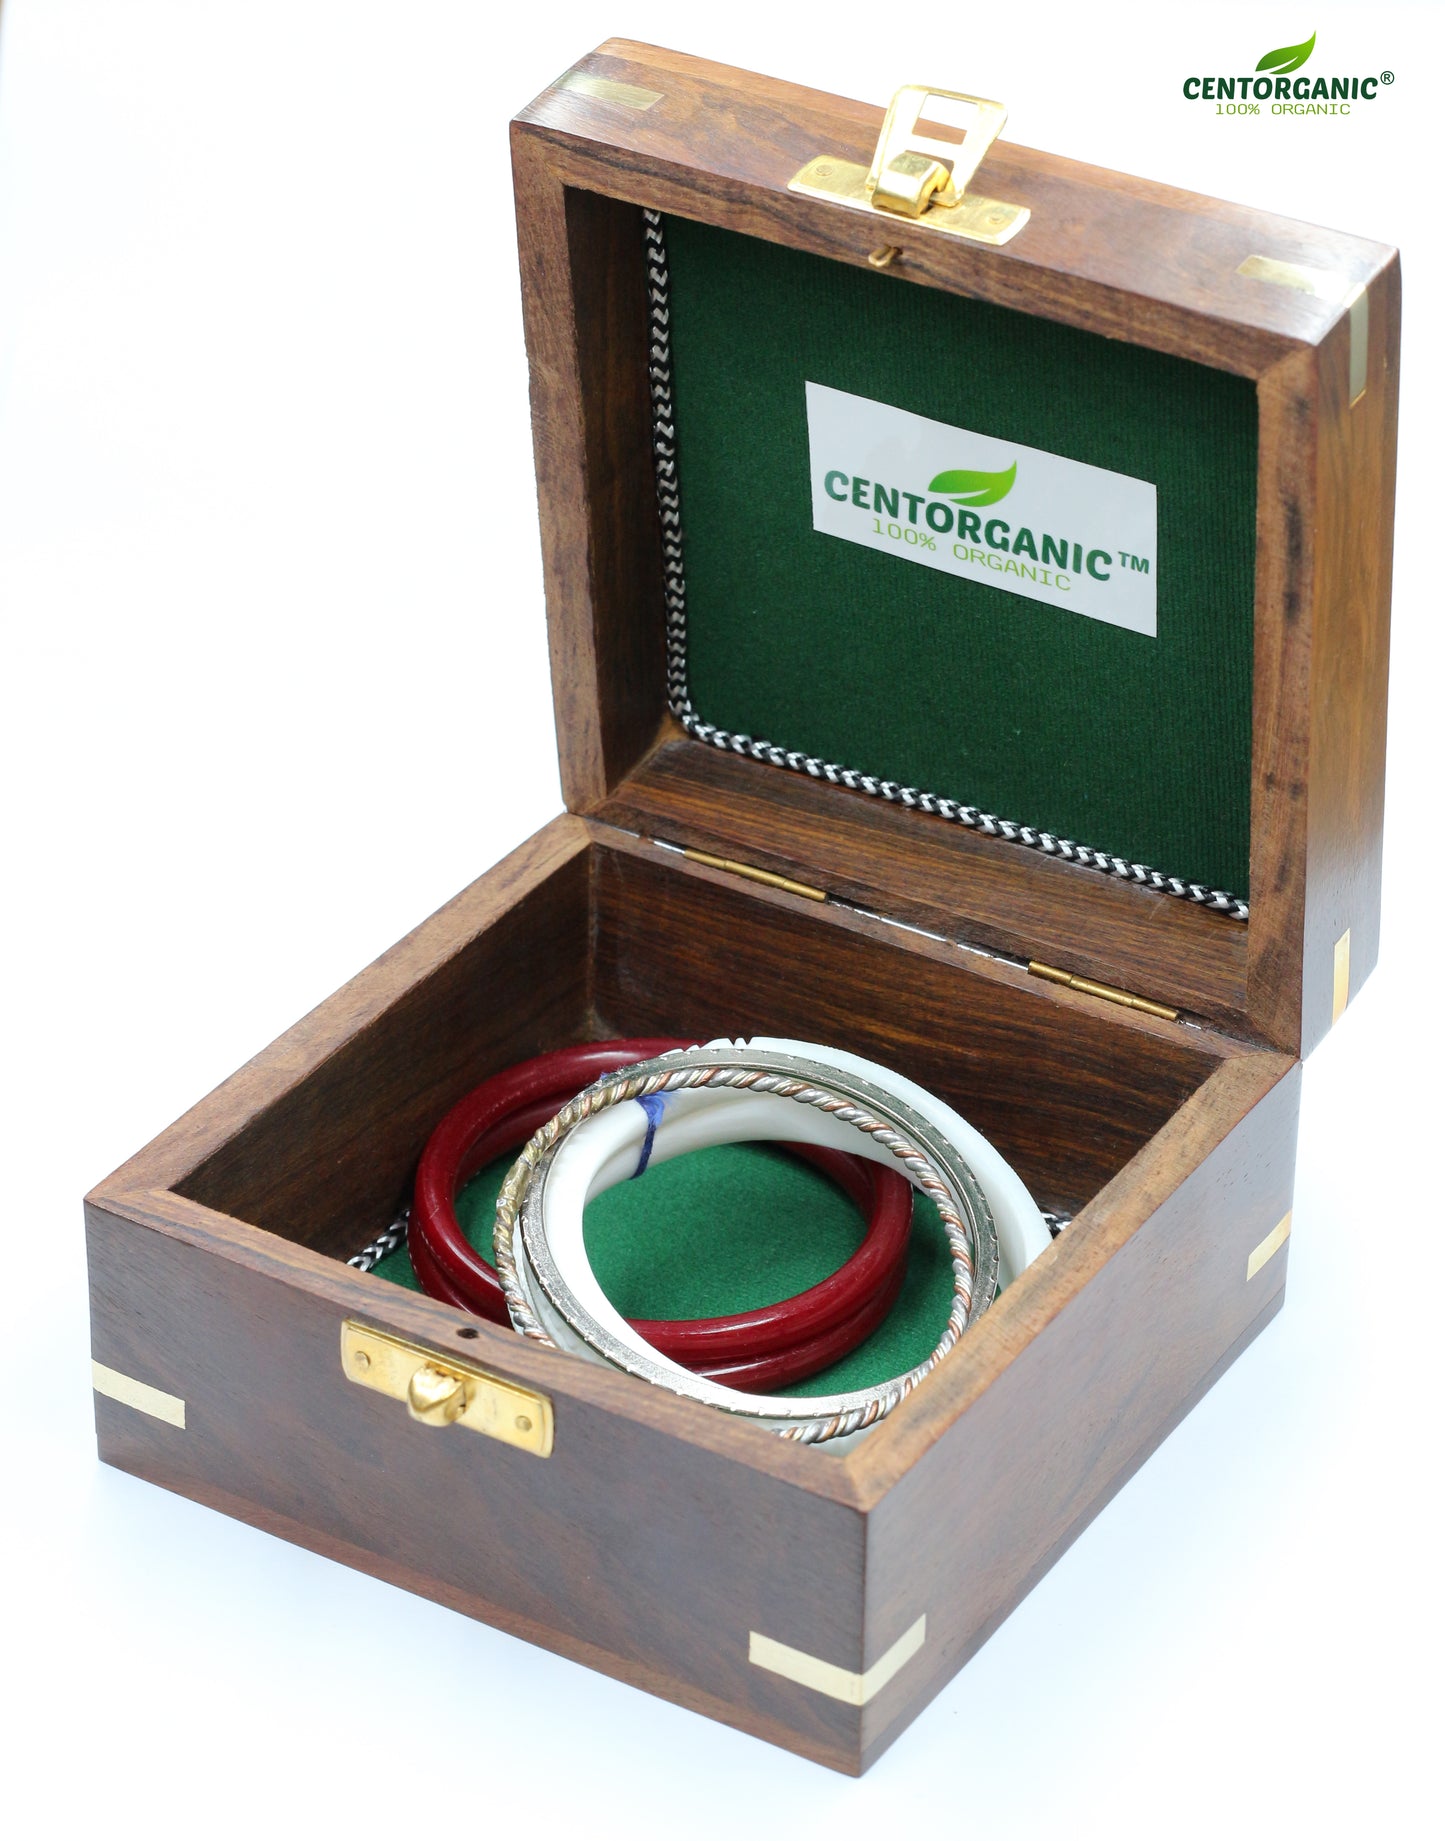 Centorganic Cutting Design sankha pola bangles for women, 1 pair of sankha, 1 pair of red pola, 2 iron noa, with free wooden jewellery box. (Design code: CSBM03)